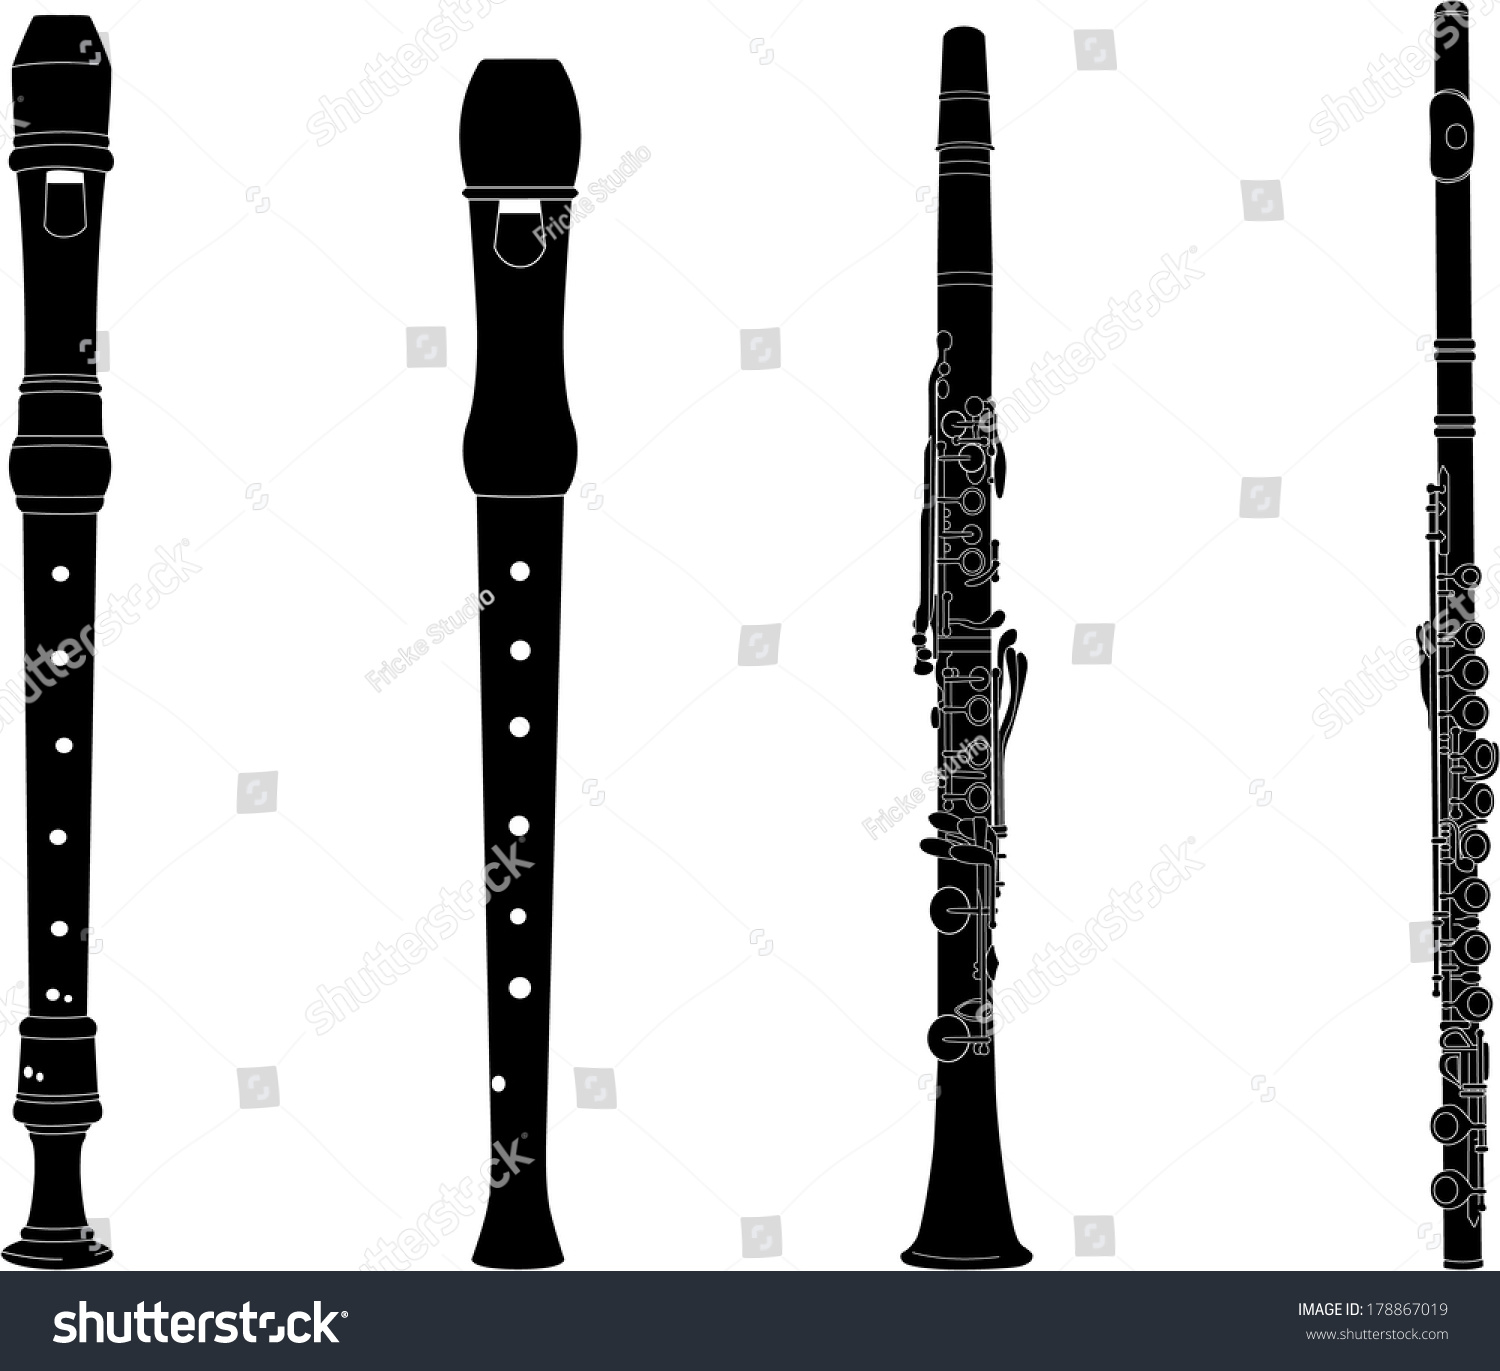 Flutes Black Stock Vector 178867019 - Shutterstock